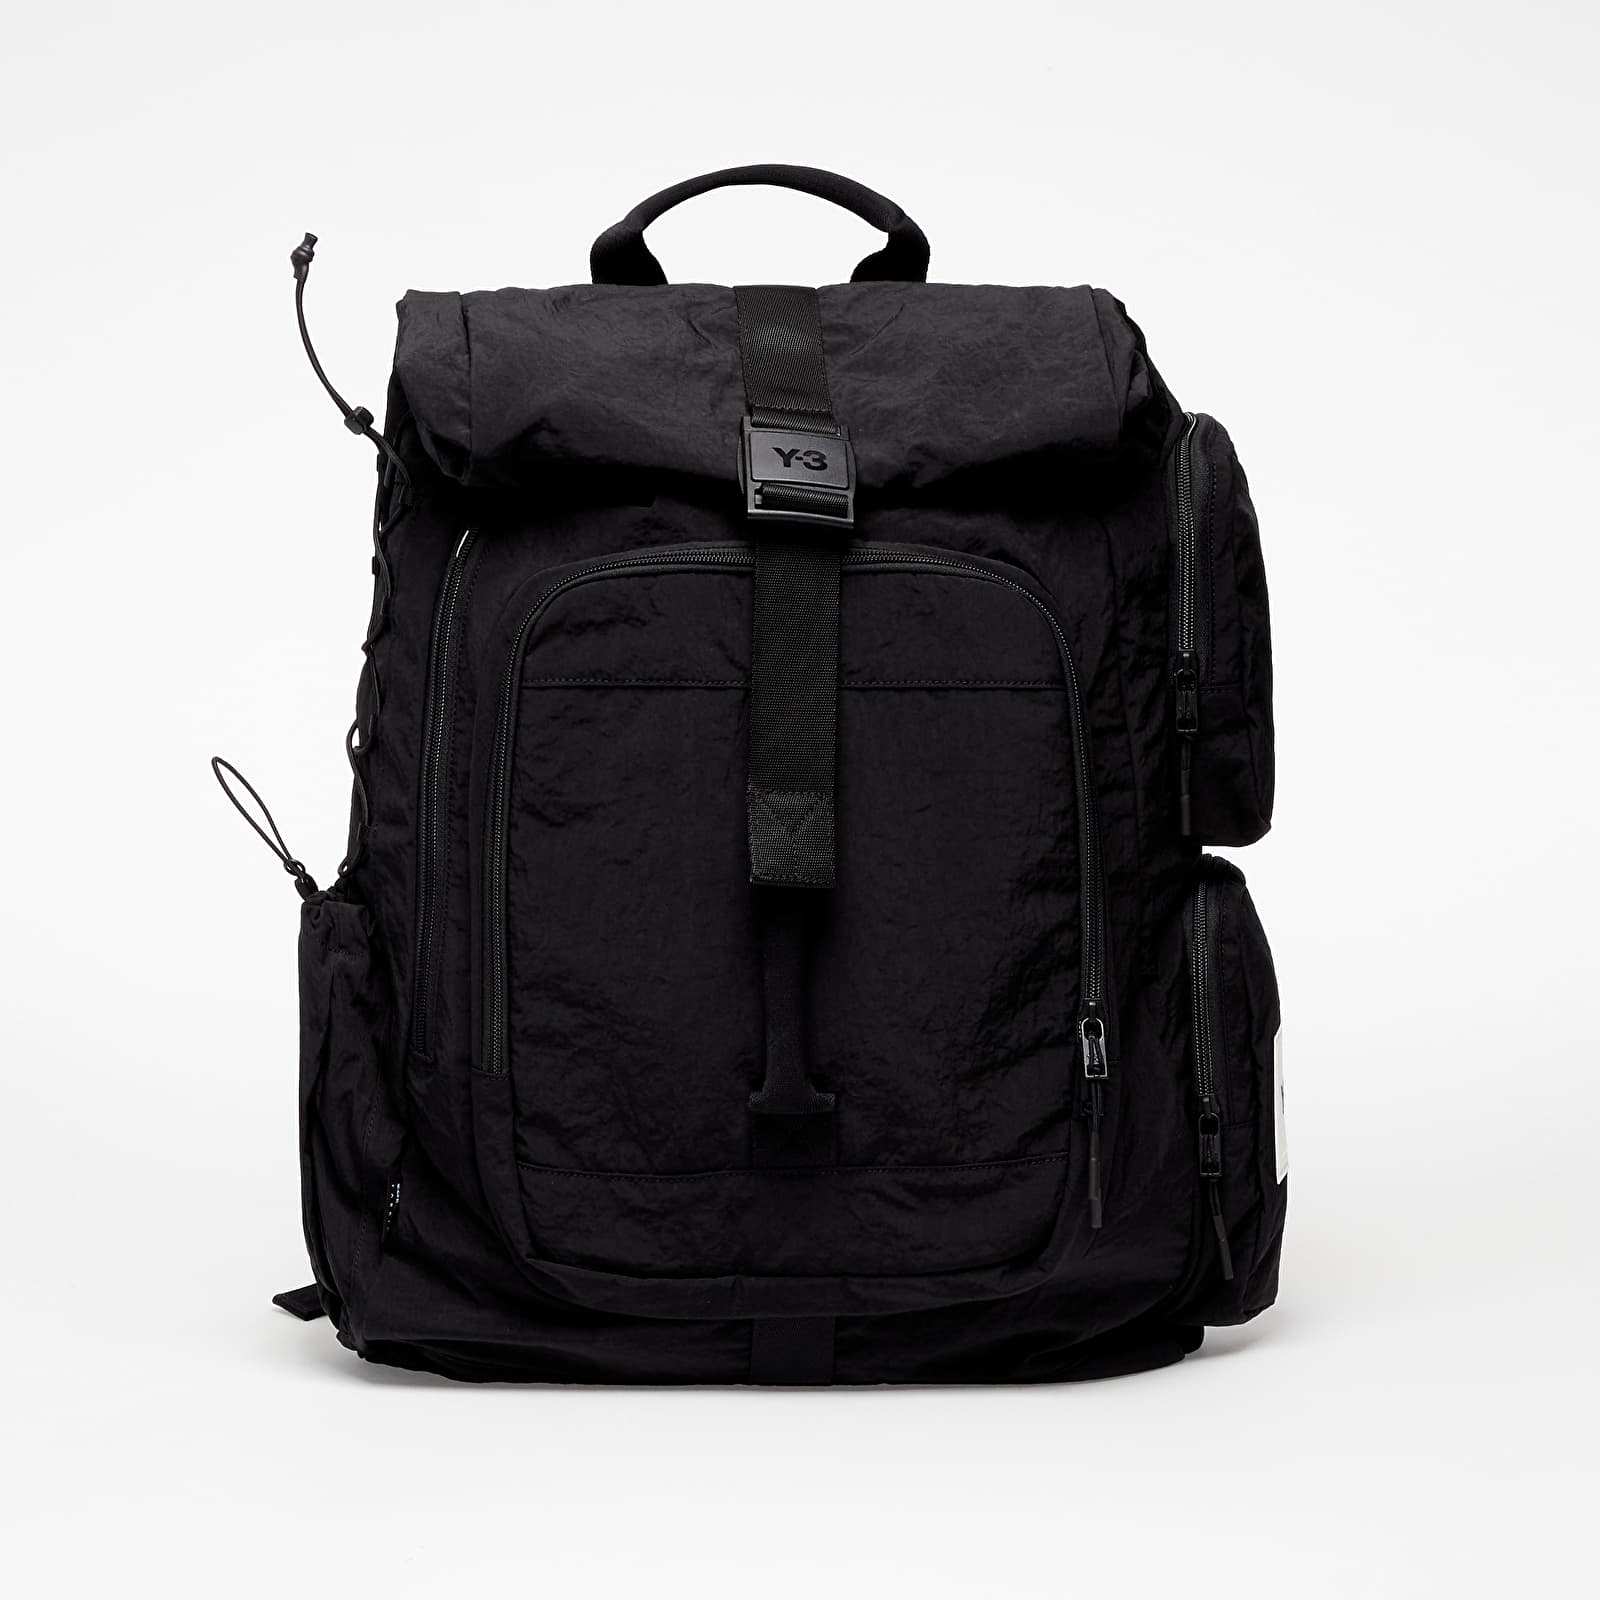 Раници Y-3 Utility Backpack Black 959155